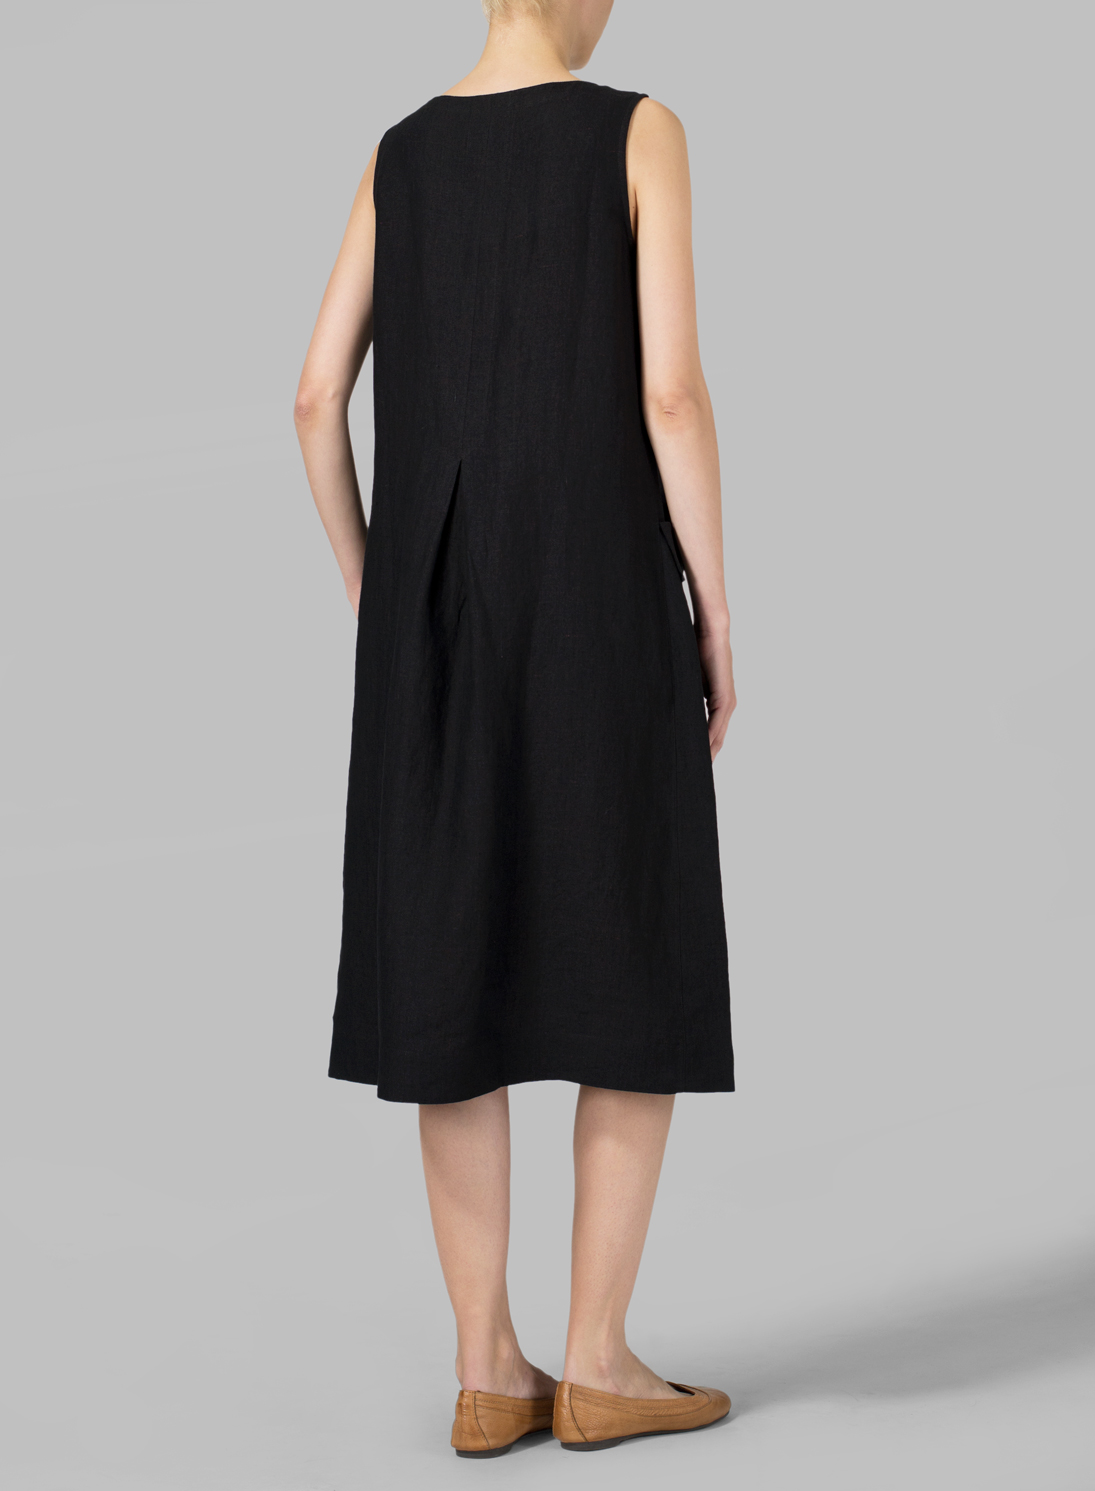 Linen Sleeveless Swing Dress - Plus Size